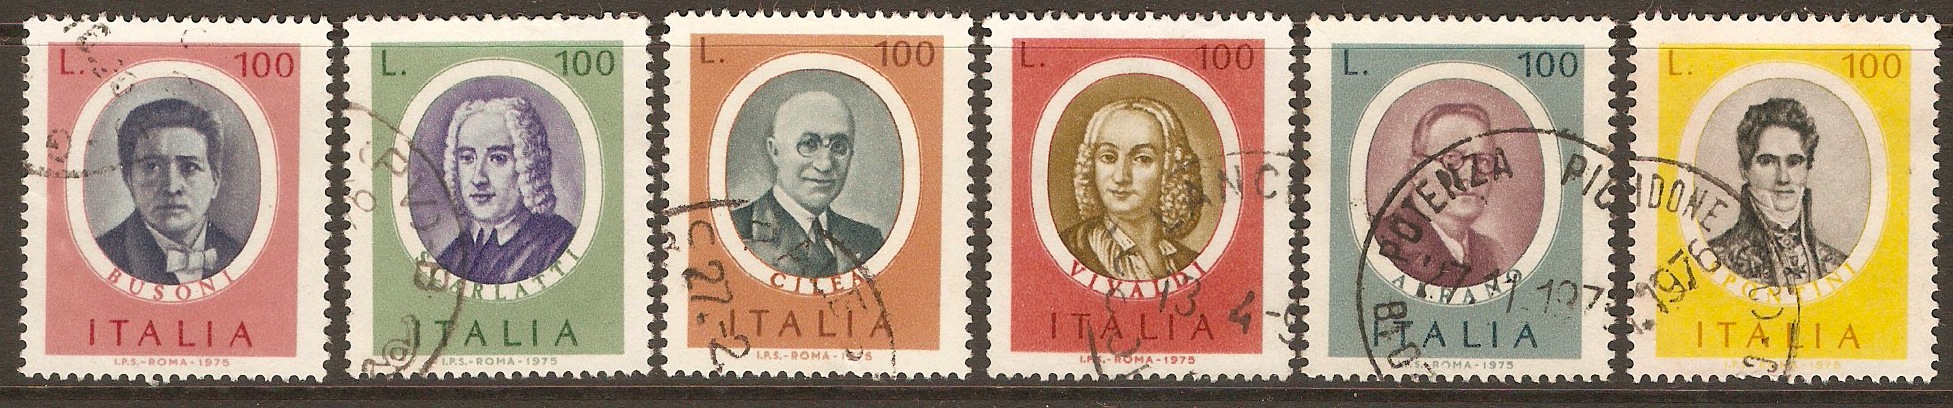 Italy 1975 Italian Composers set. SG1456-SG1461.